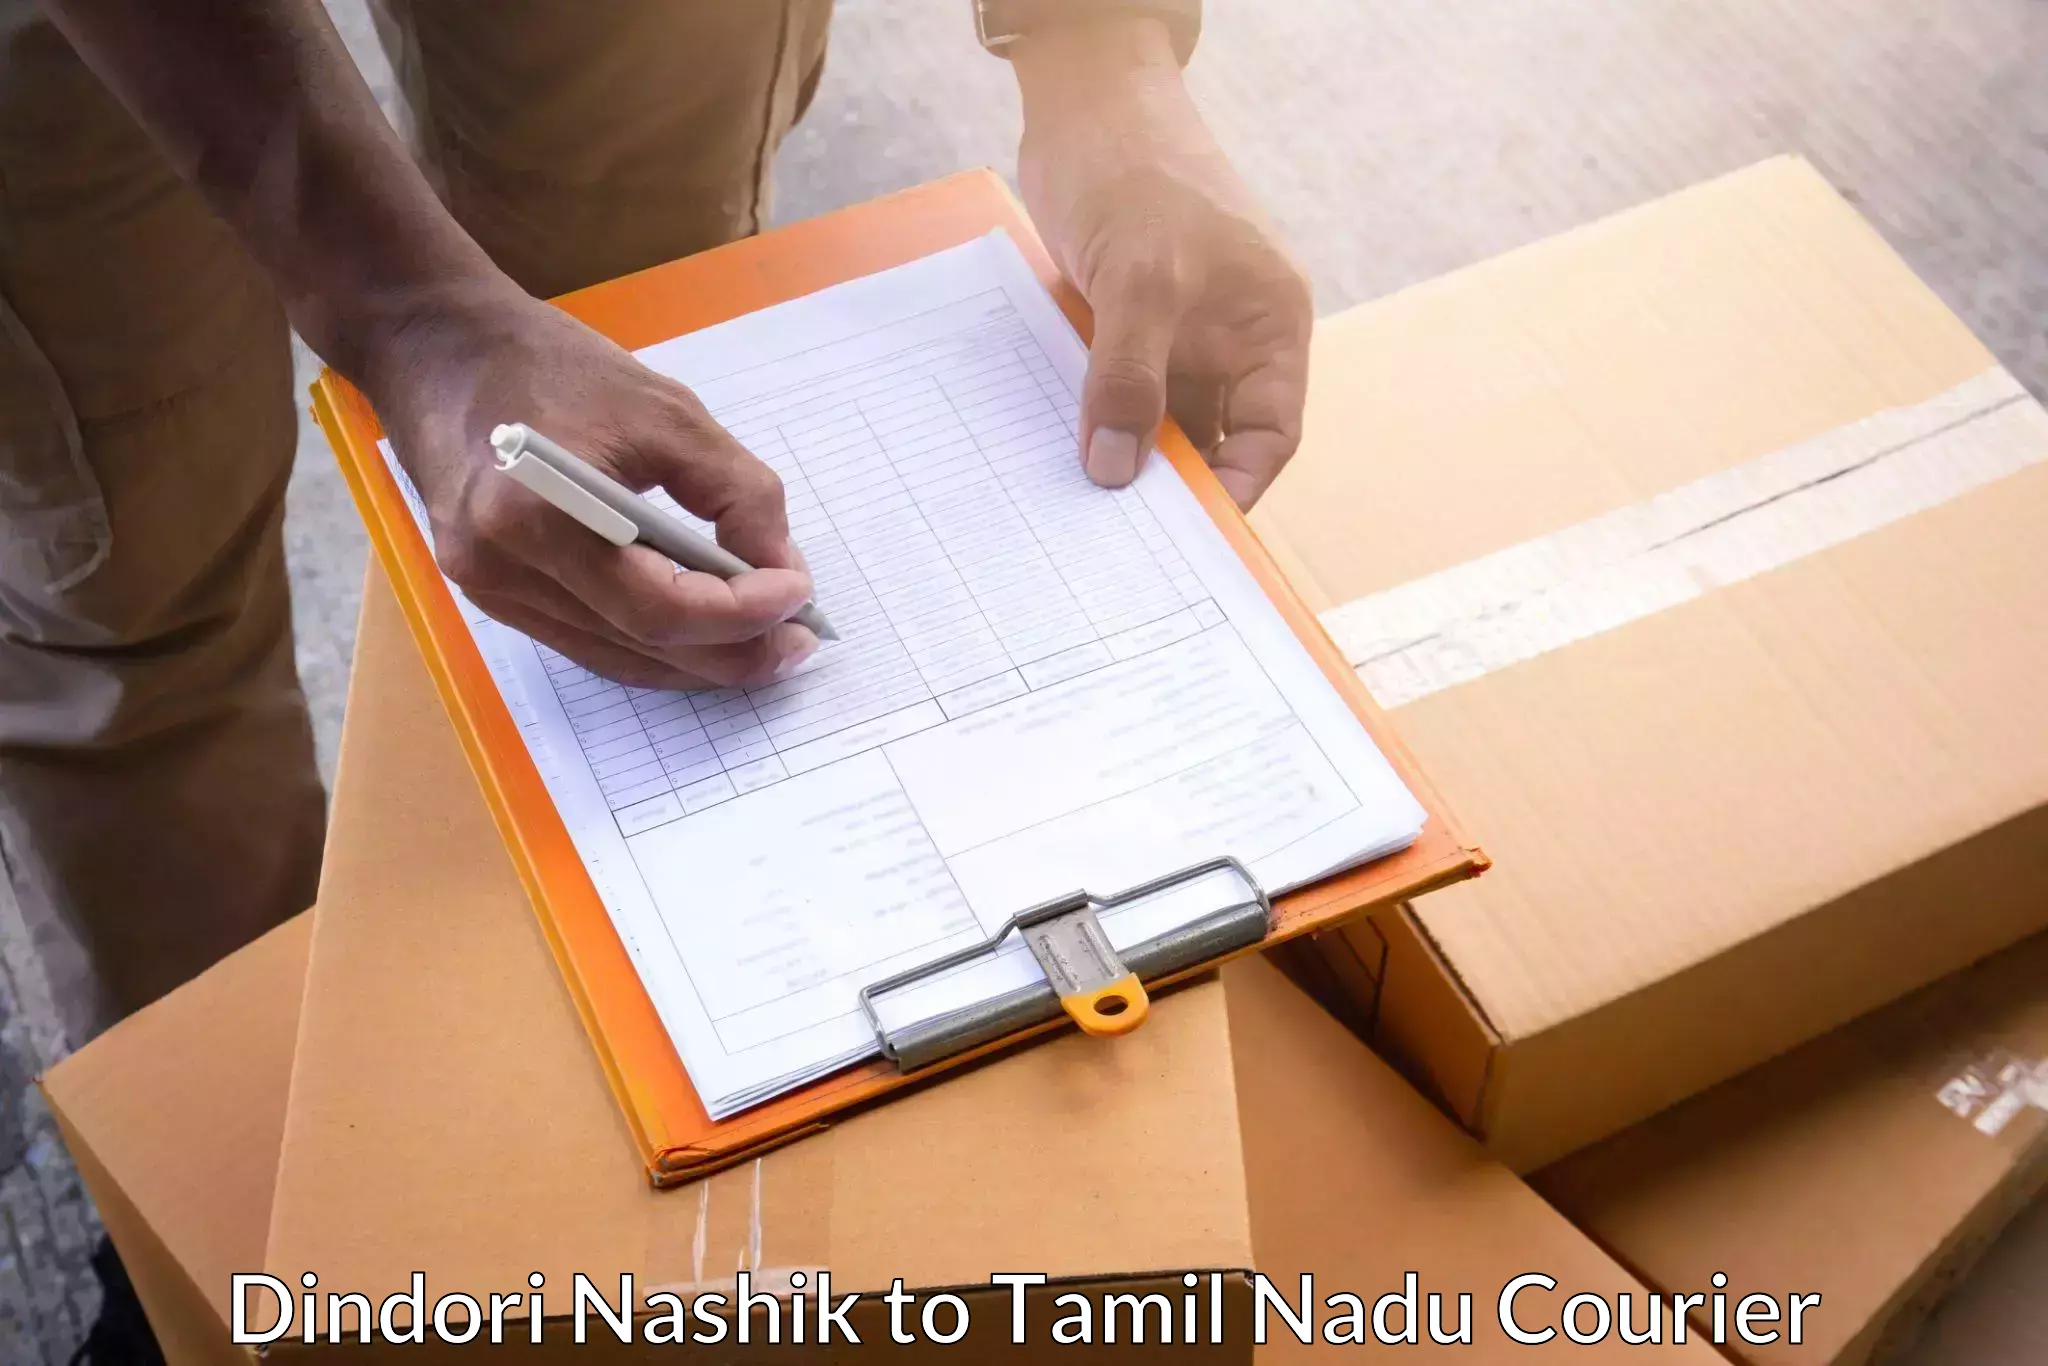 Efficient order fulfillment Dindori Nashik to Tiruchi